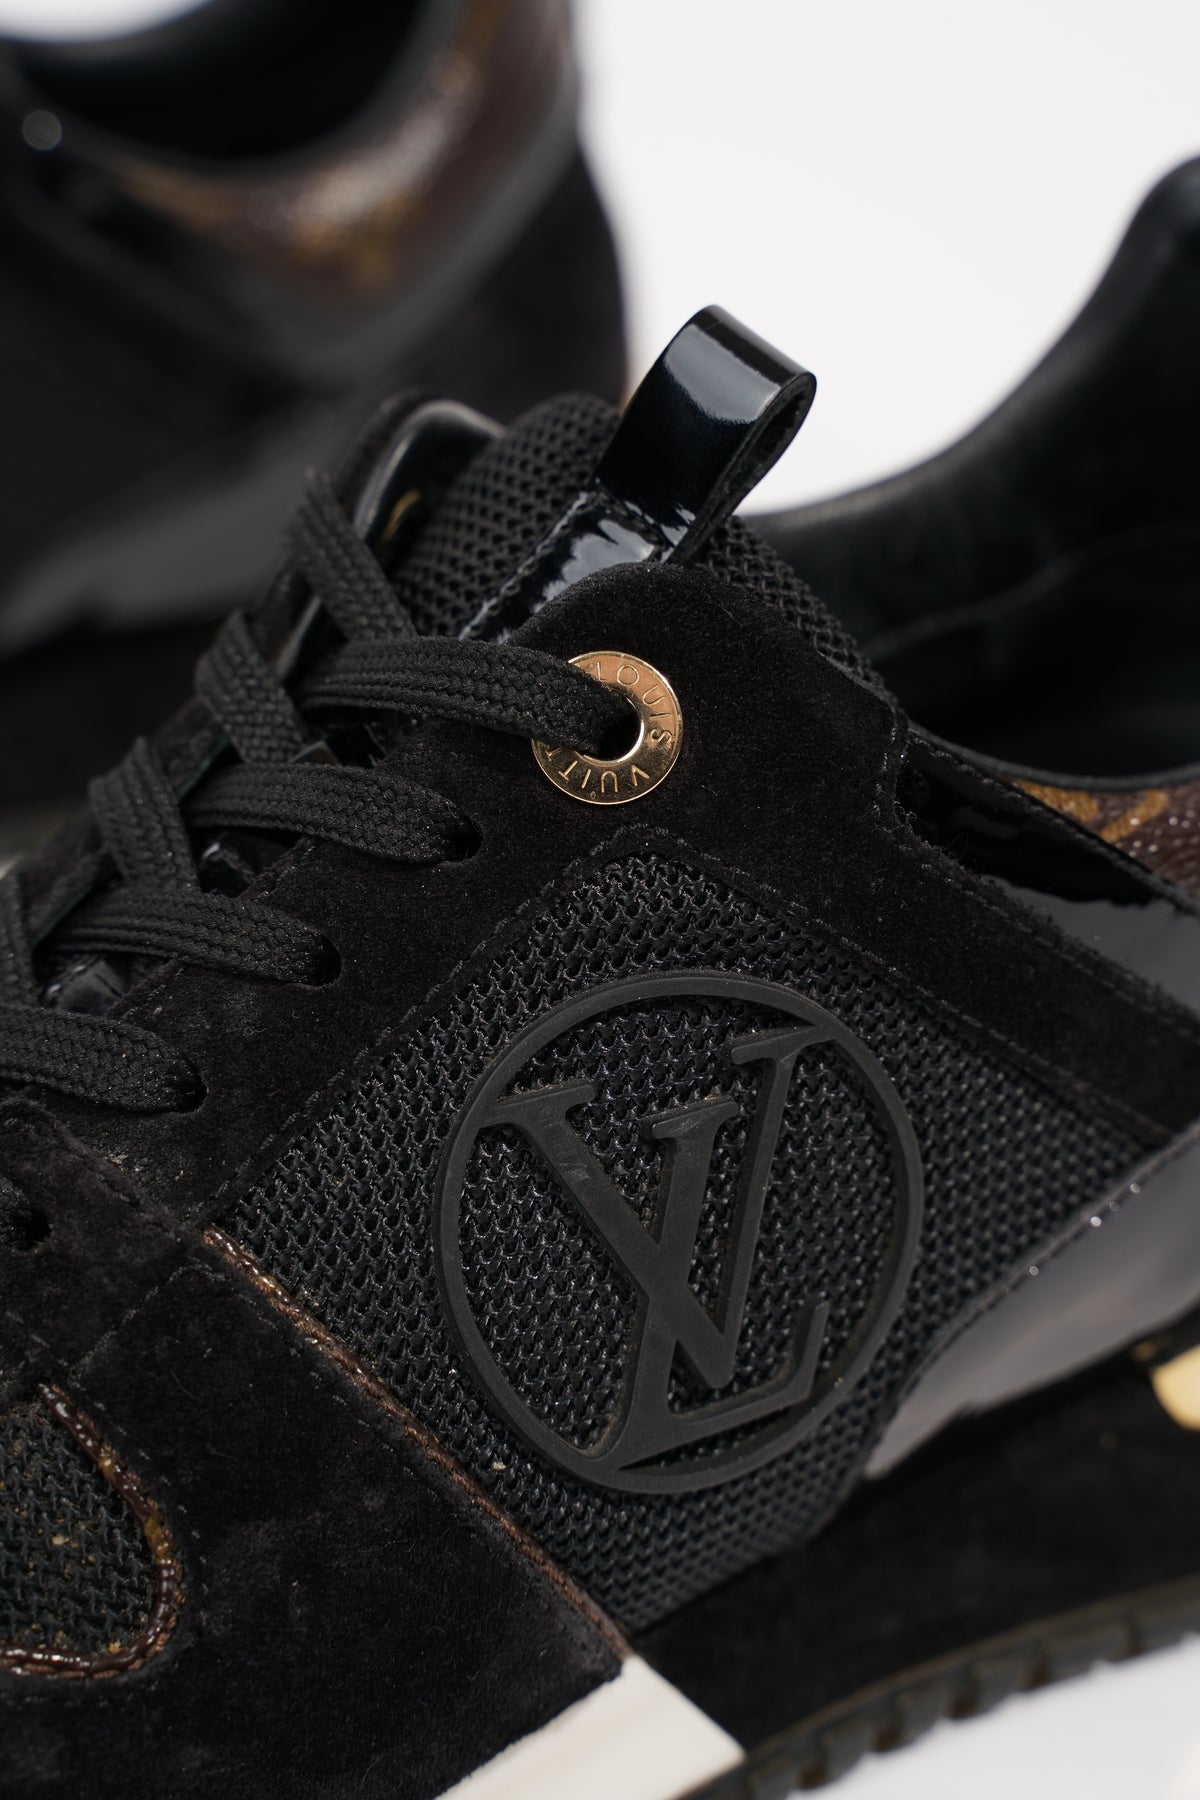 Louis Vuitton Black Leather & Gold Unisex Run Away Sneakers